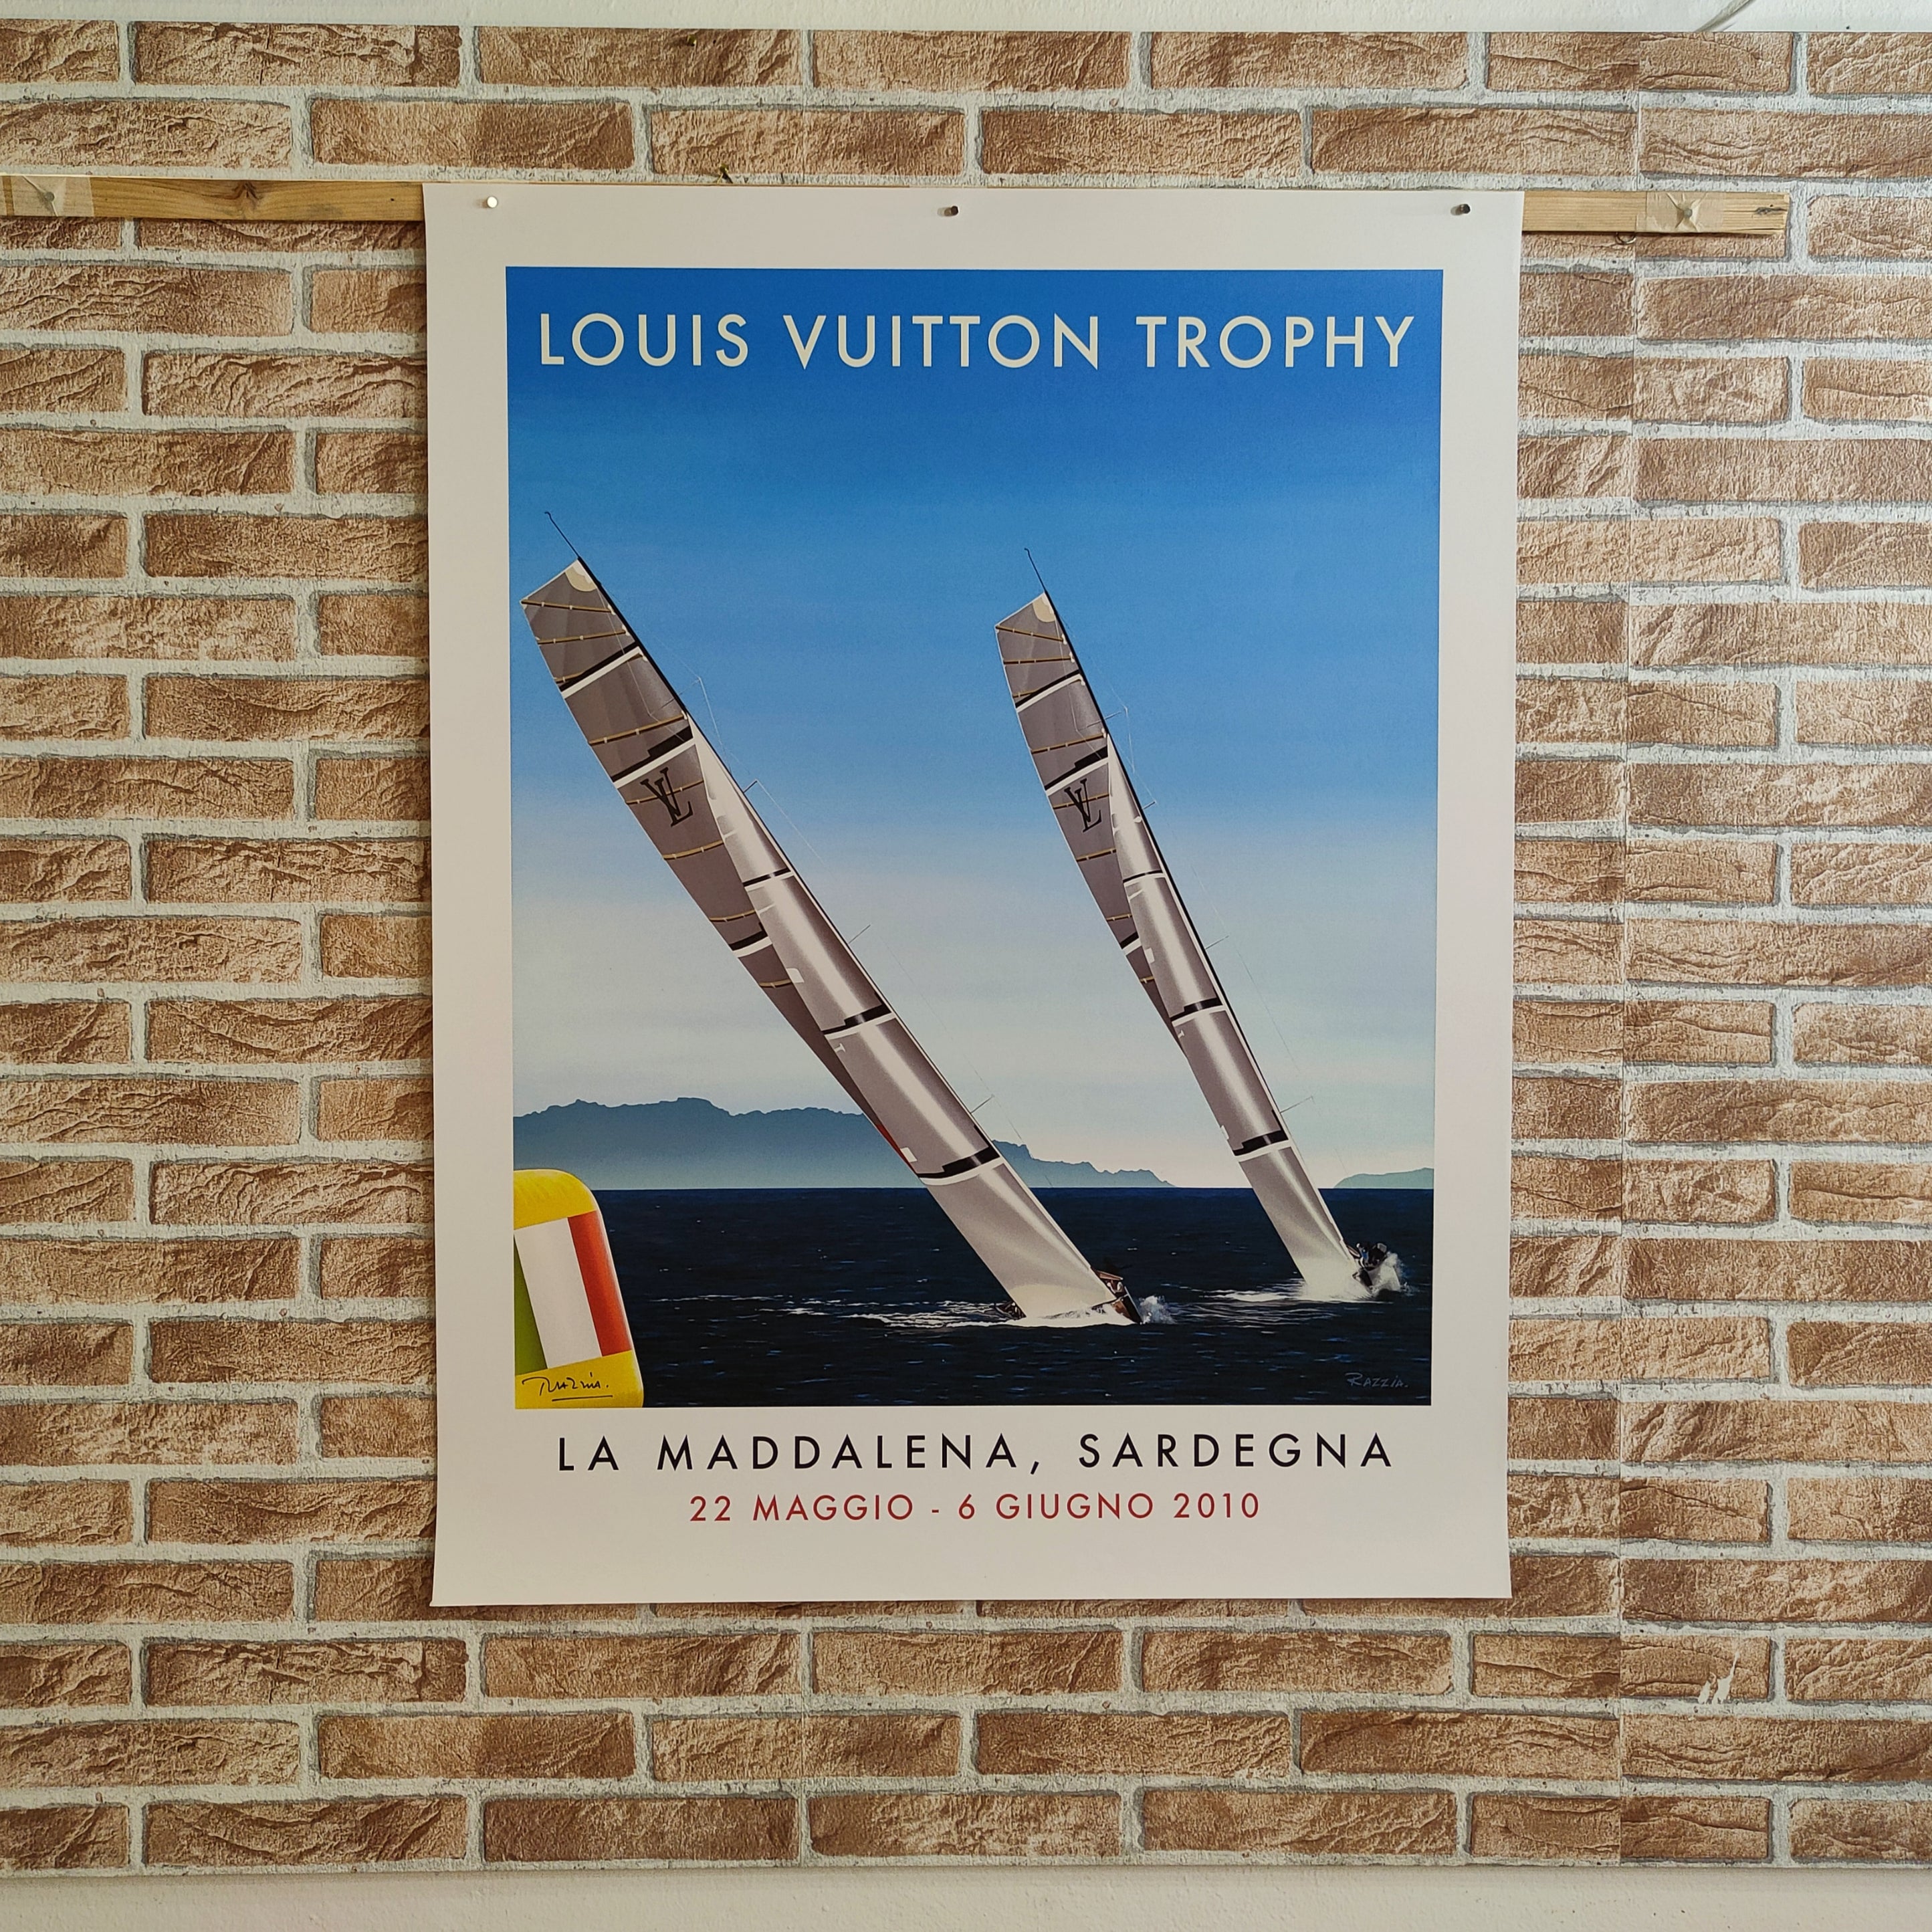 Louis Vuitton Trophy - La Maddalena, Sardegna (medium format)